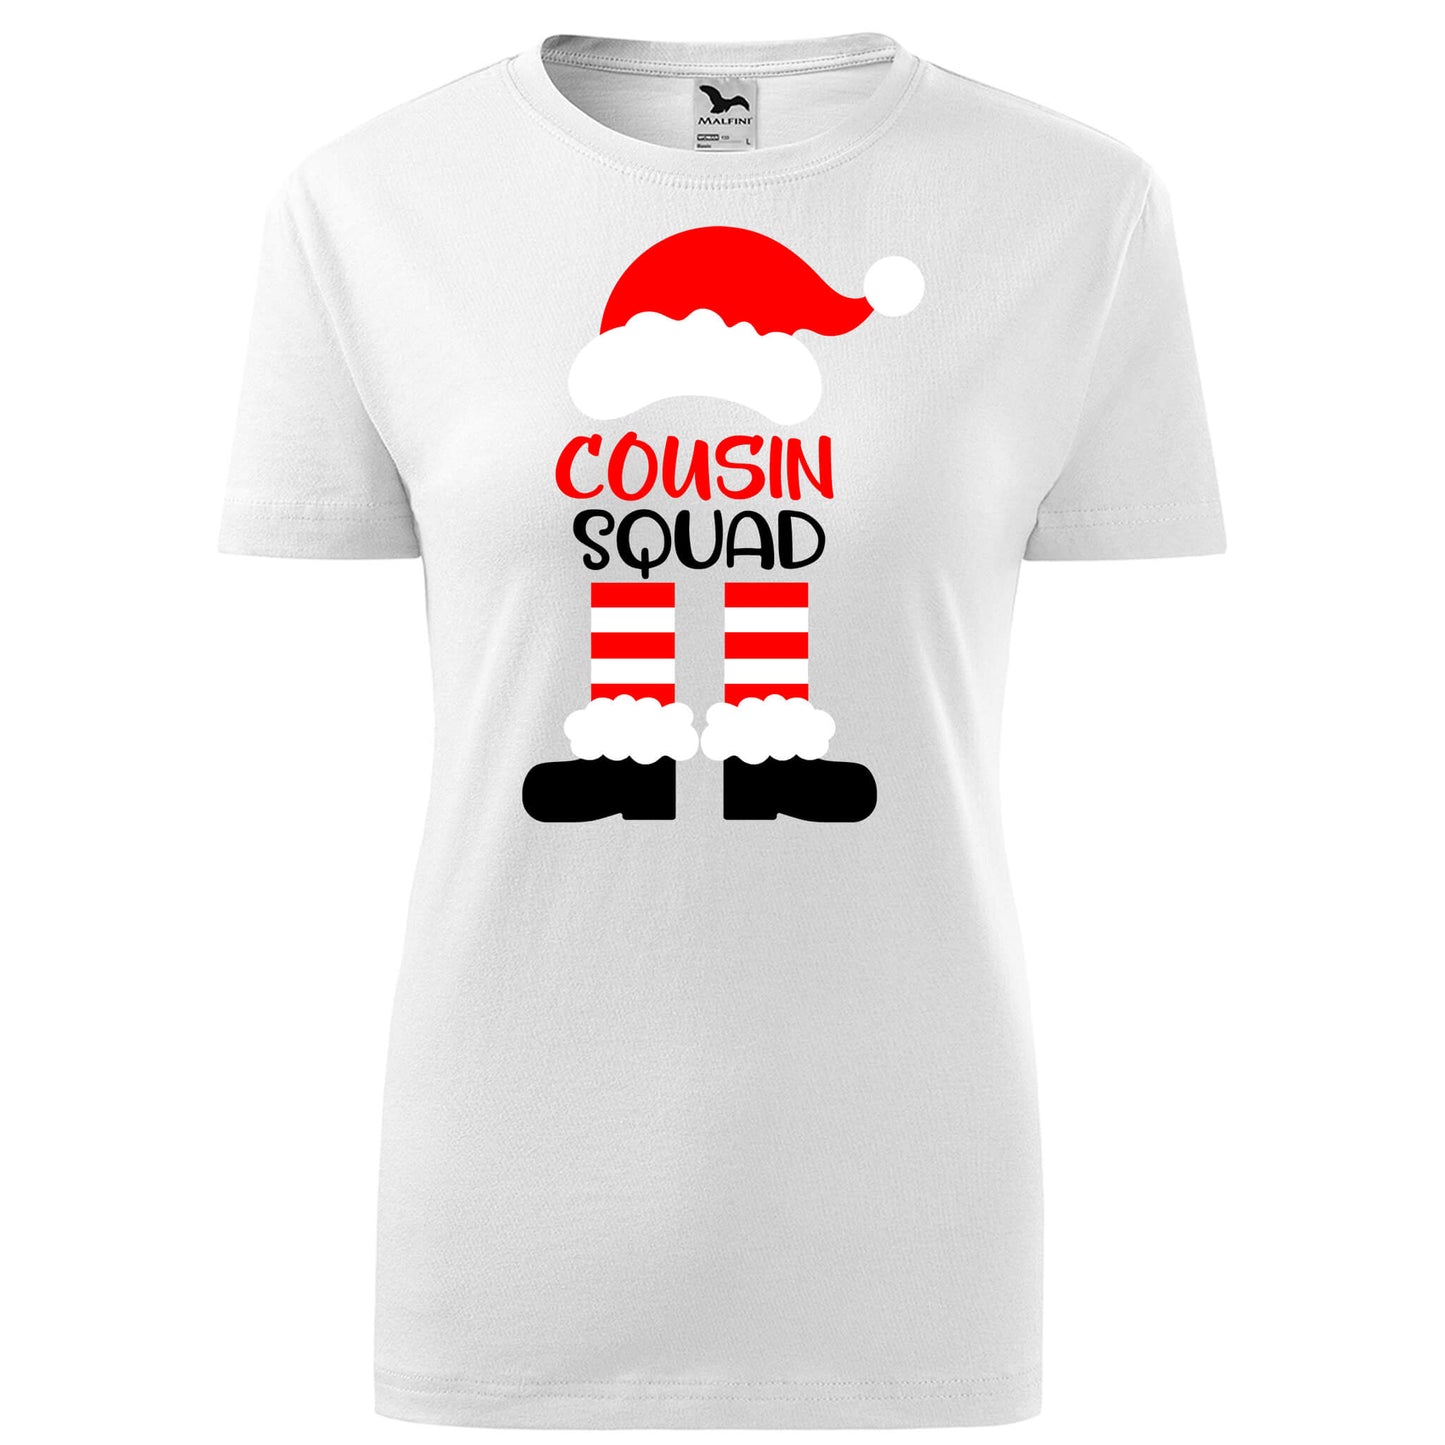 Cousin squad t-shirt - rvdesignprint